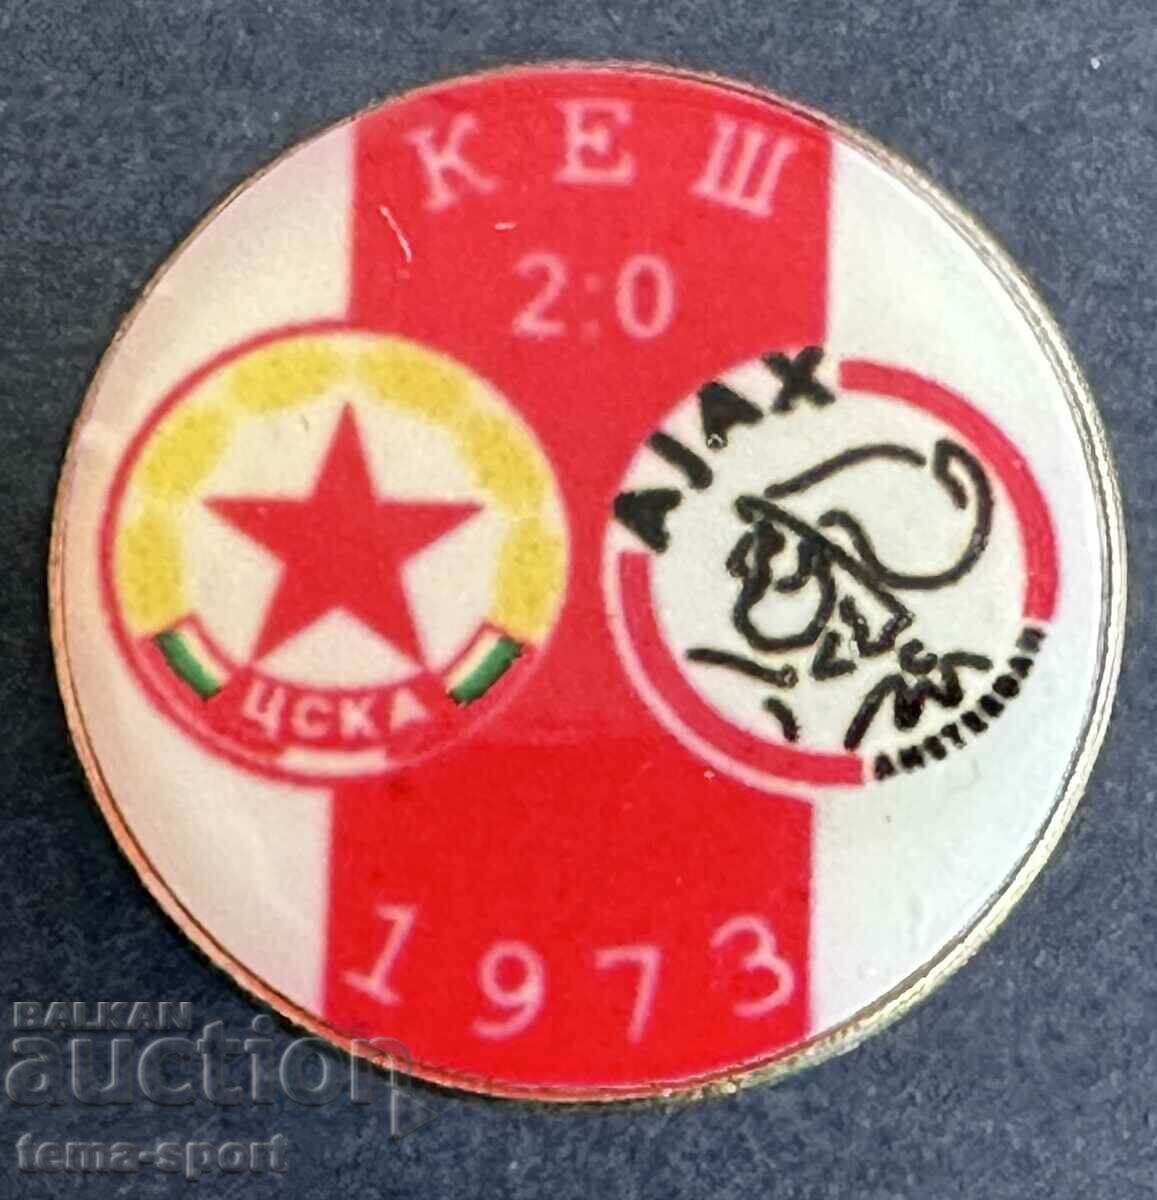 376 Bulgaria sign football club CSKA Ajax 1973.